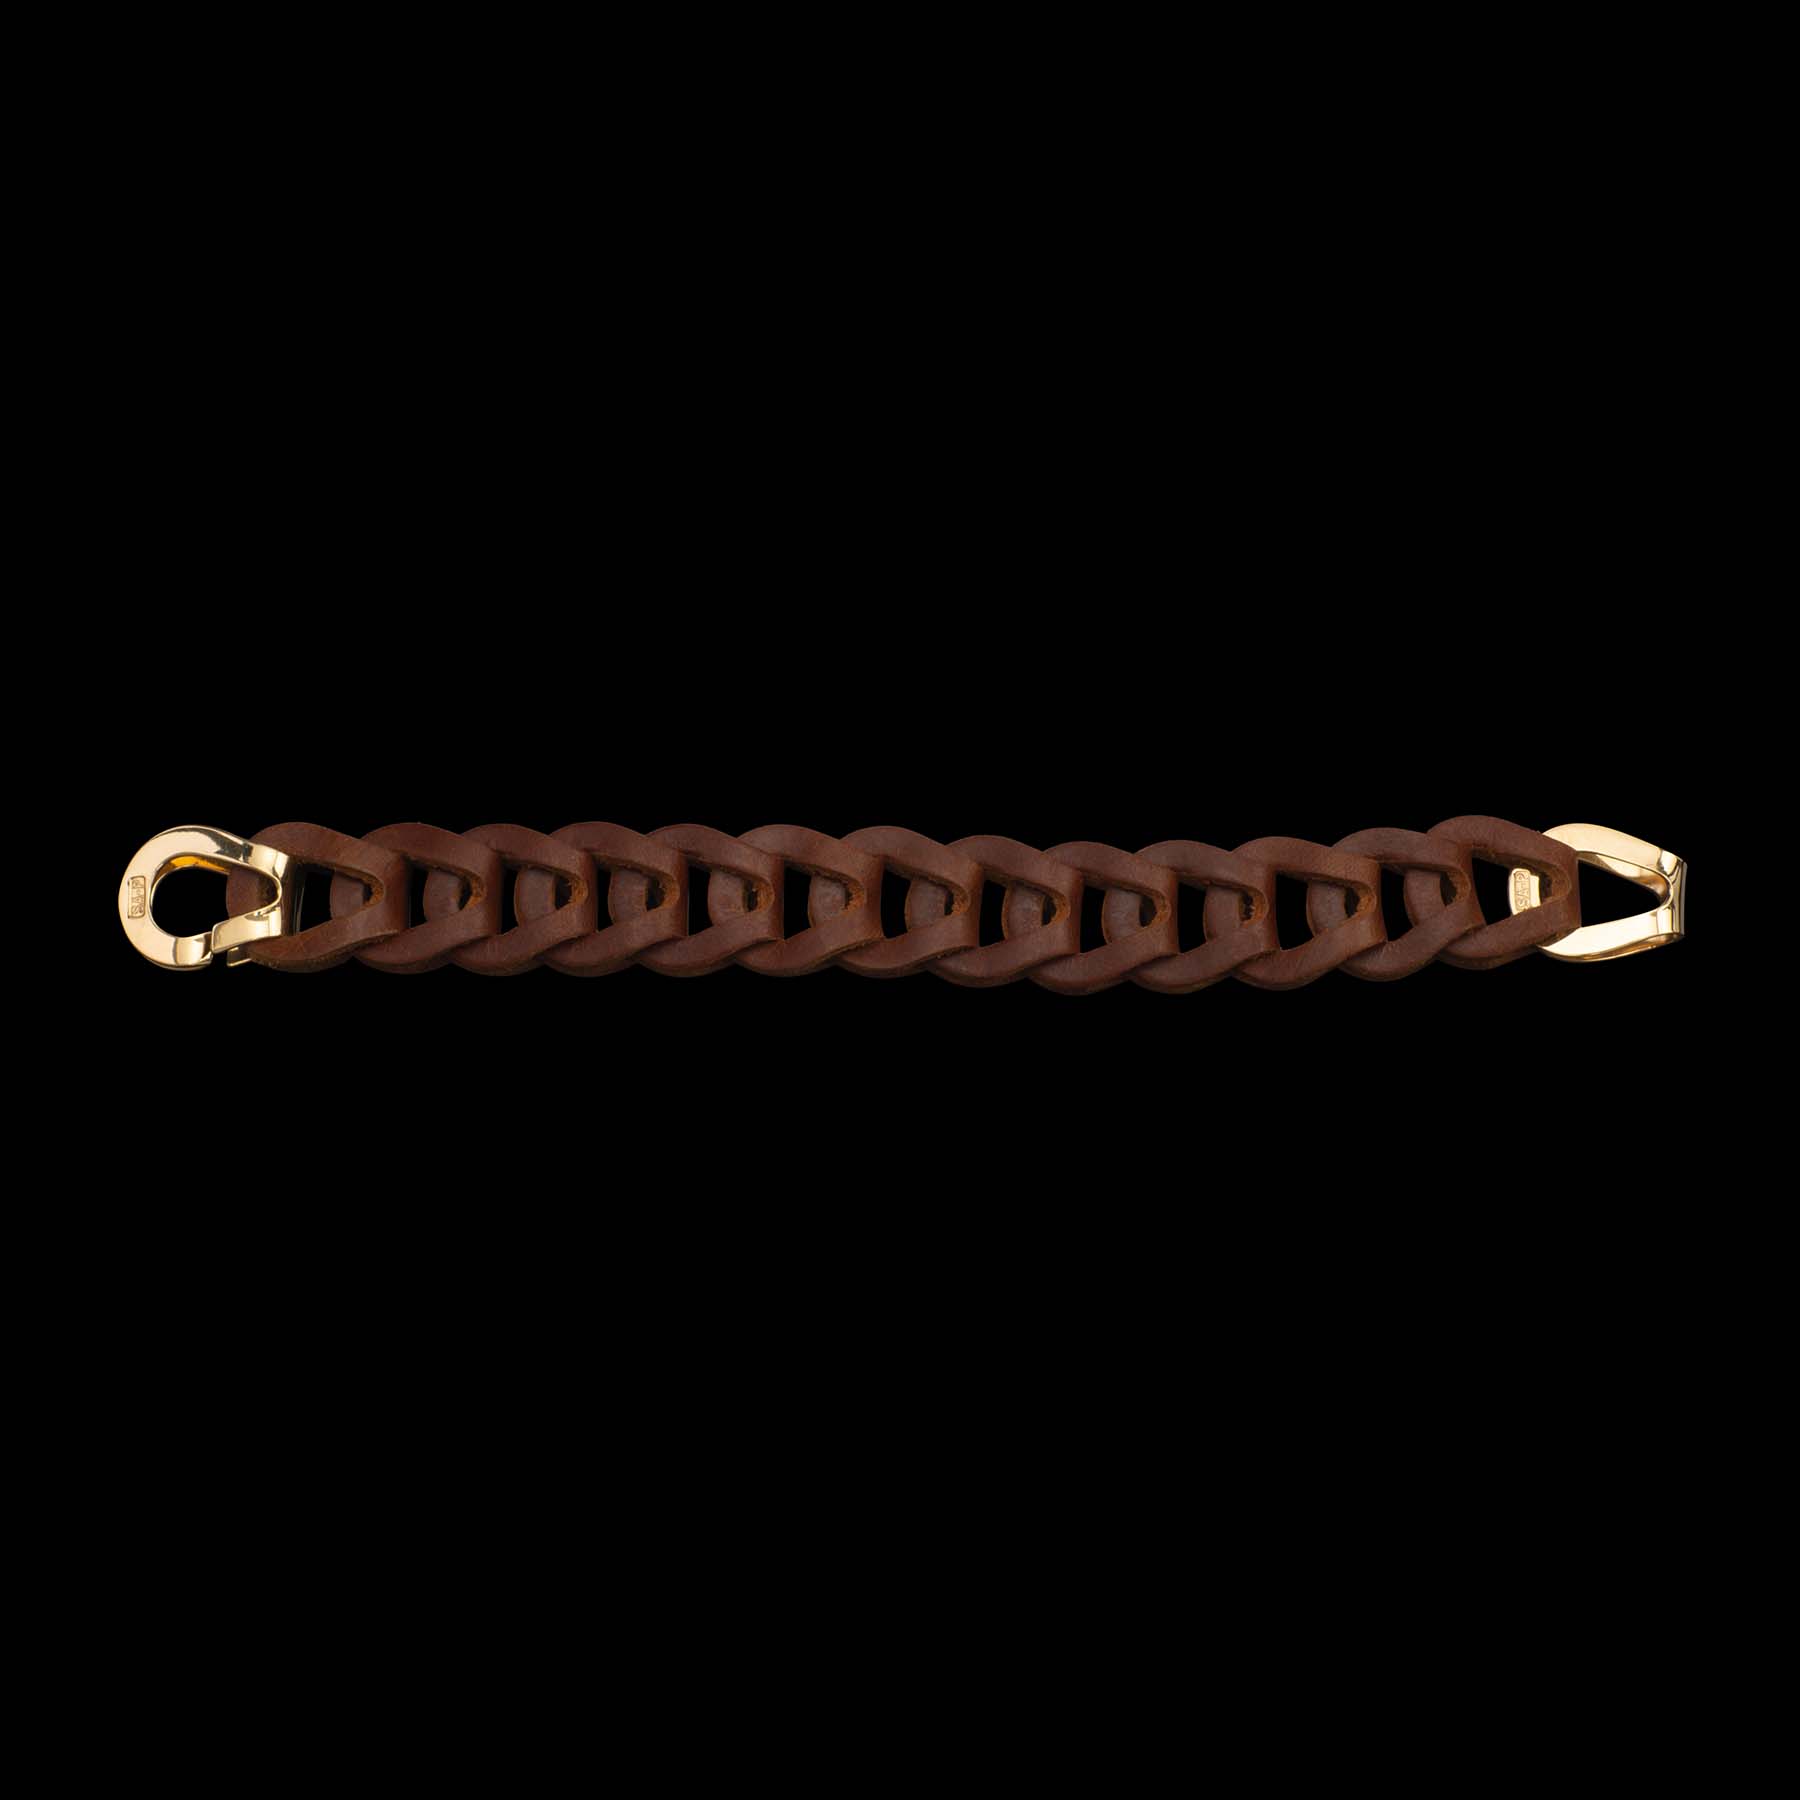 Gladiator bracelet by Solange Azagury-Partridge - Leather and 18 carat gold - flat view